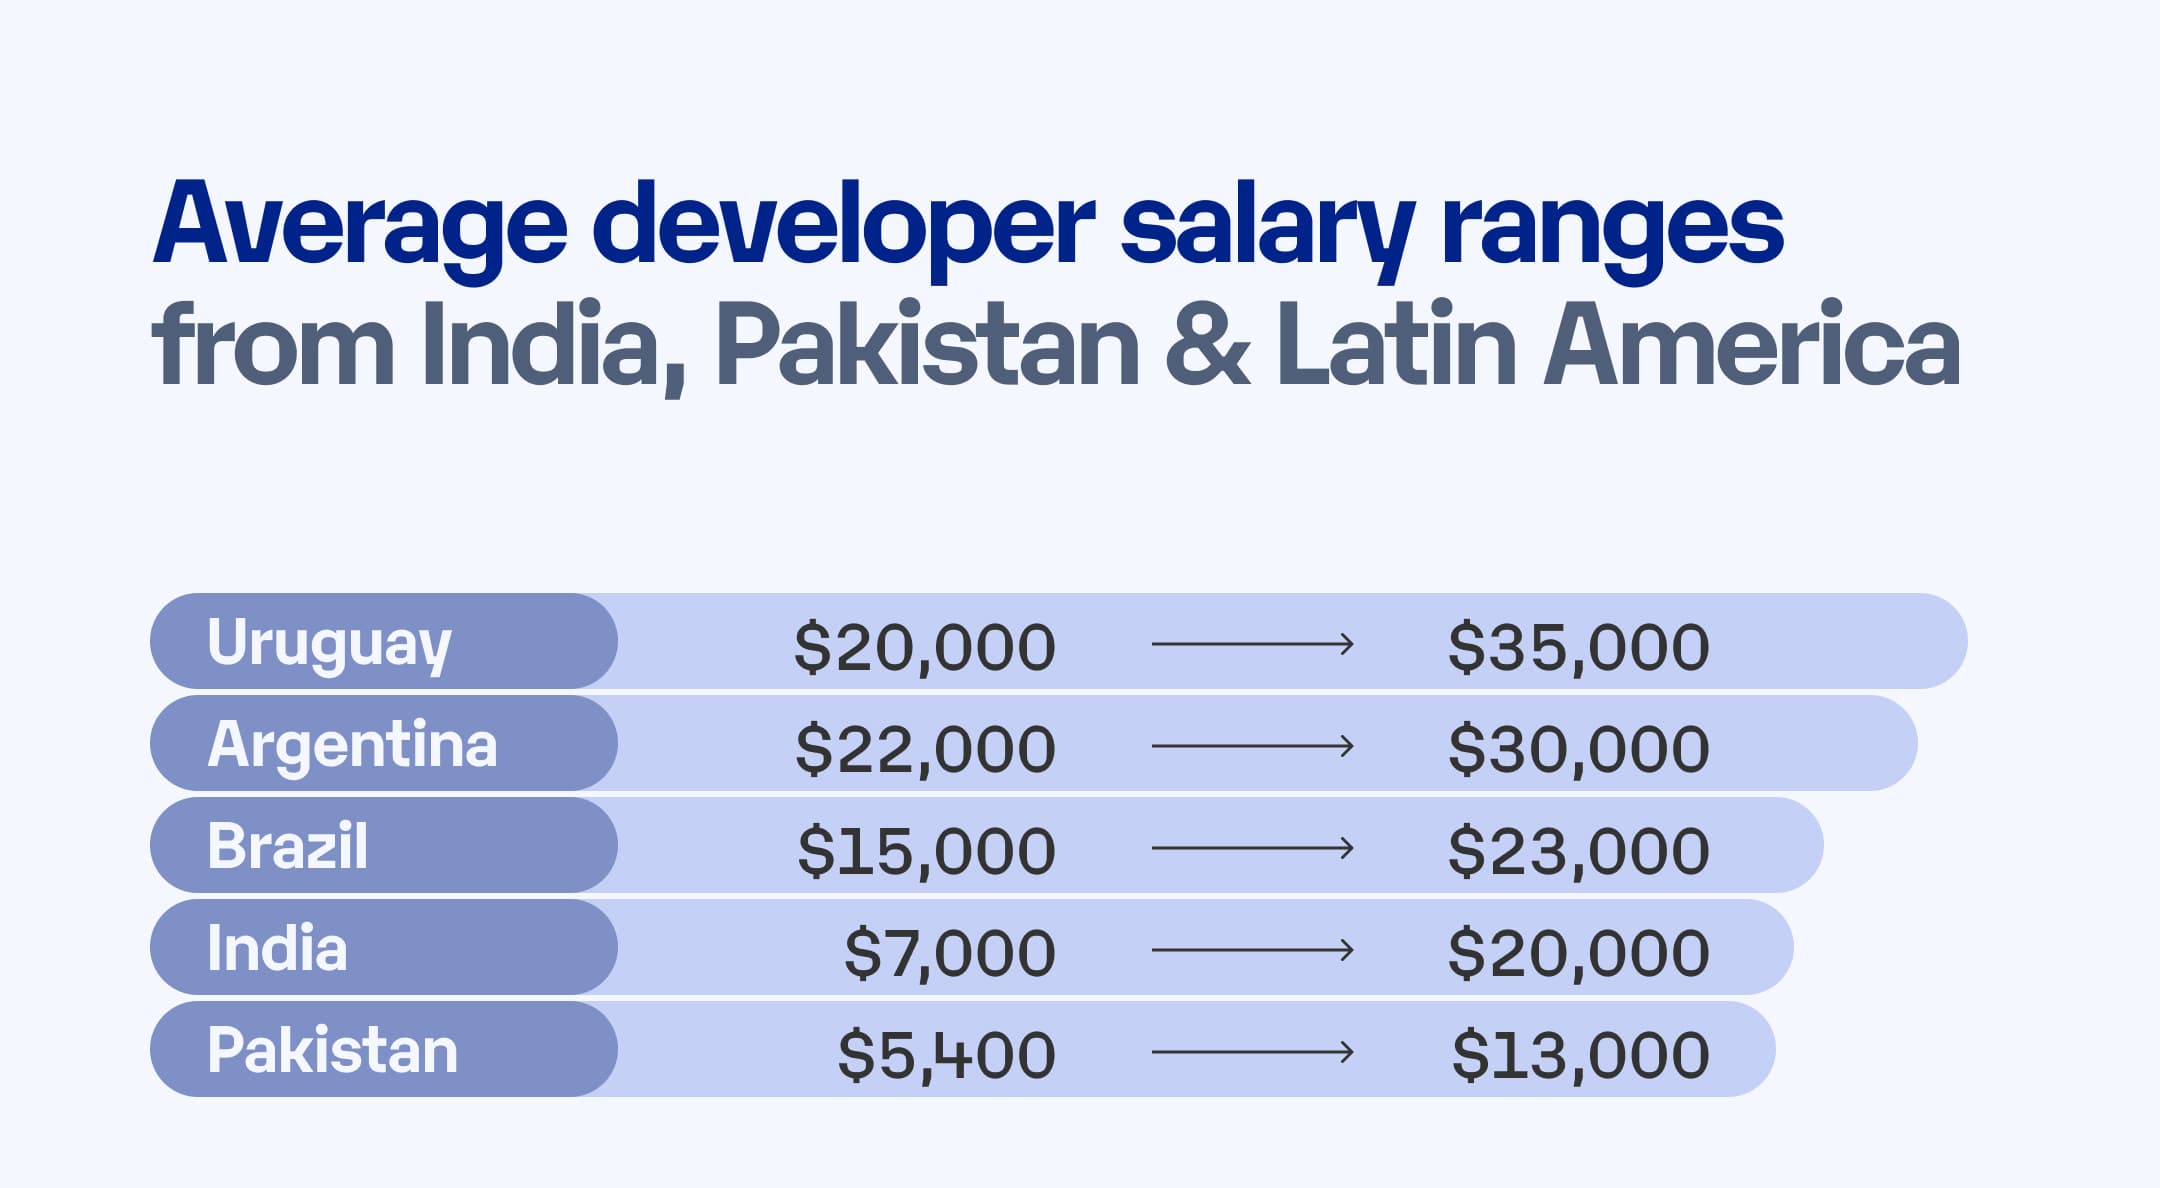 Average Developer Salary Ranges from India, Pakistan & Latin America.